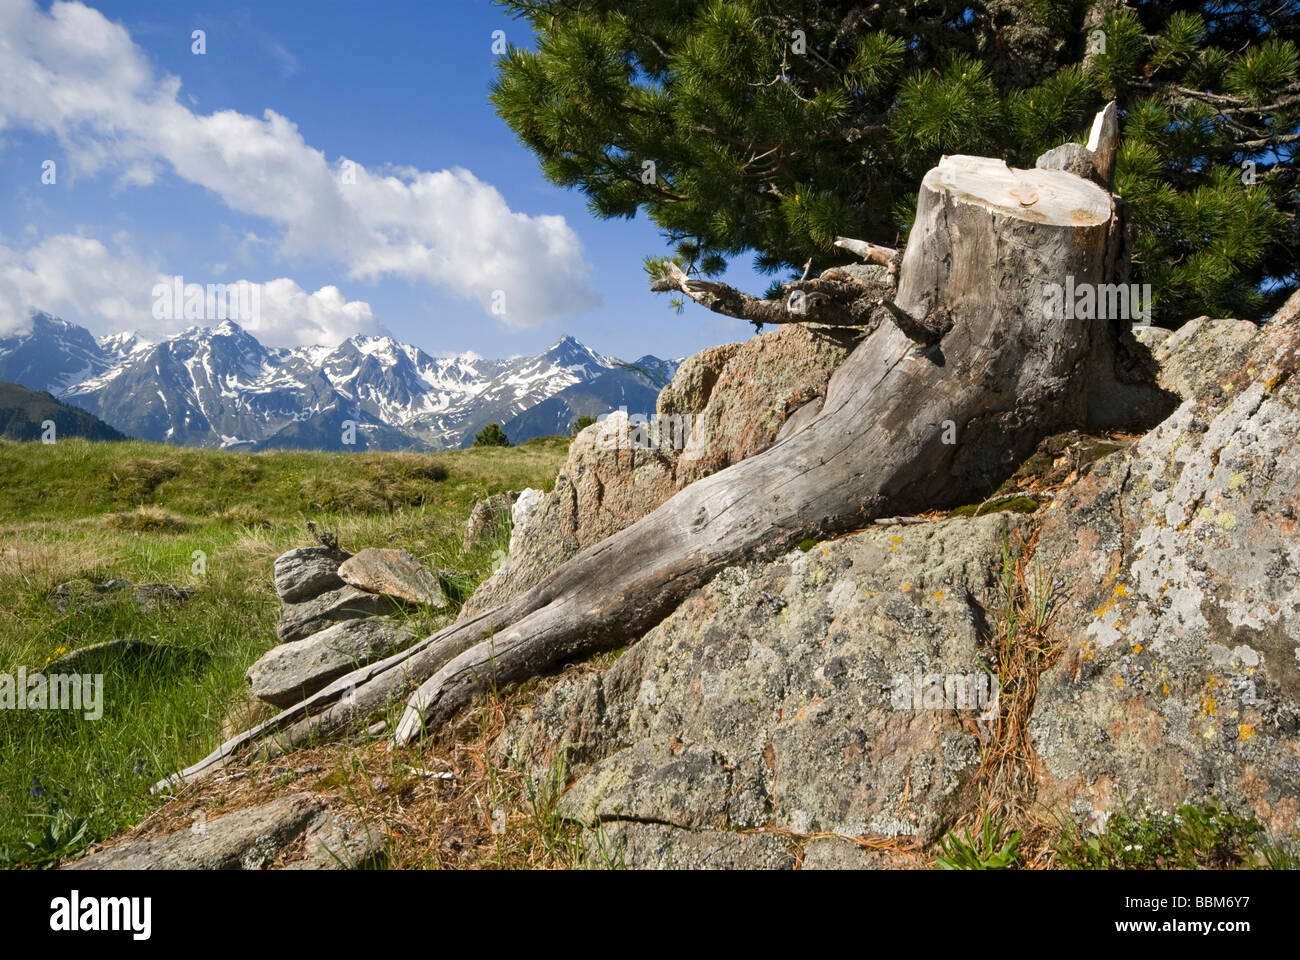 Suisse coupe pin (Pinus cembra), Jerzens, Wenner Berg Alpe, Pitztal, Tyrol, Autriche, Europe Banque D'Images